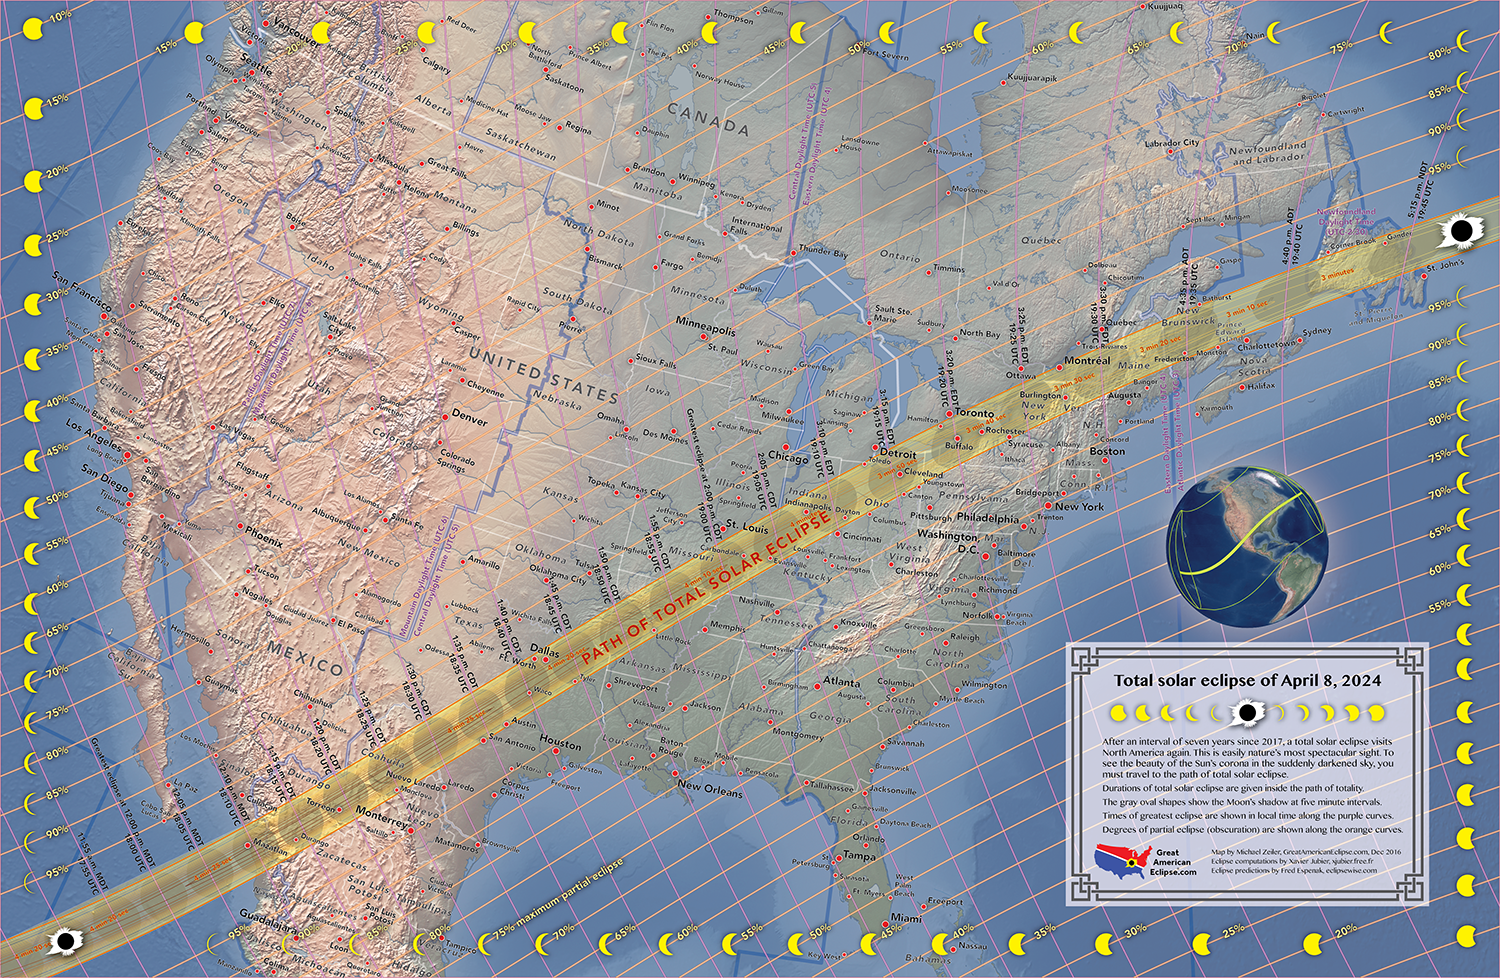 CREDIT: GreatAmericanEclipse.com - MAP OF THE APRIL 8, 2024 TOTAL SOLAR ECLIPSE